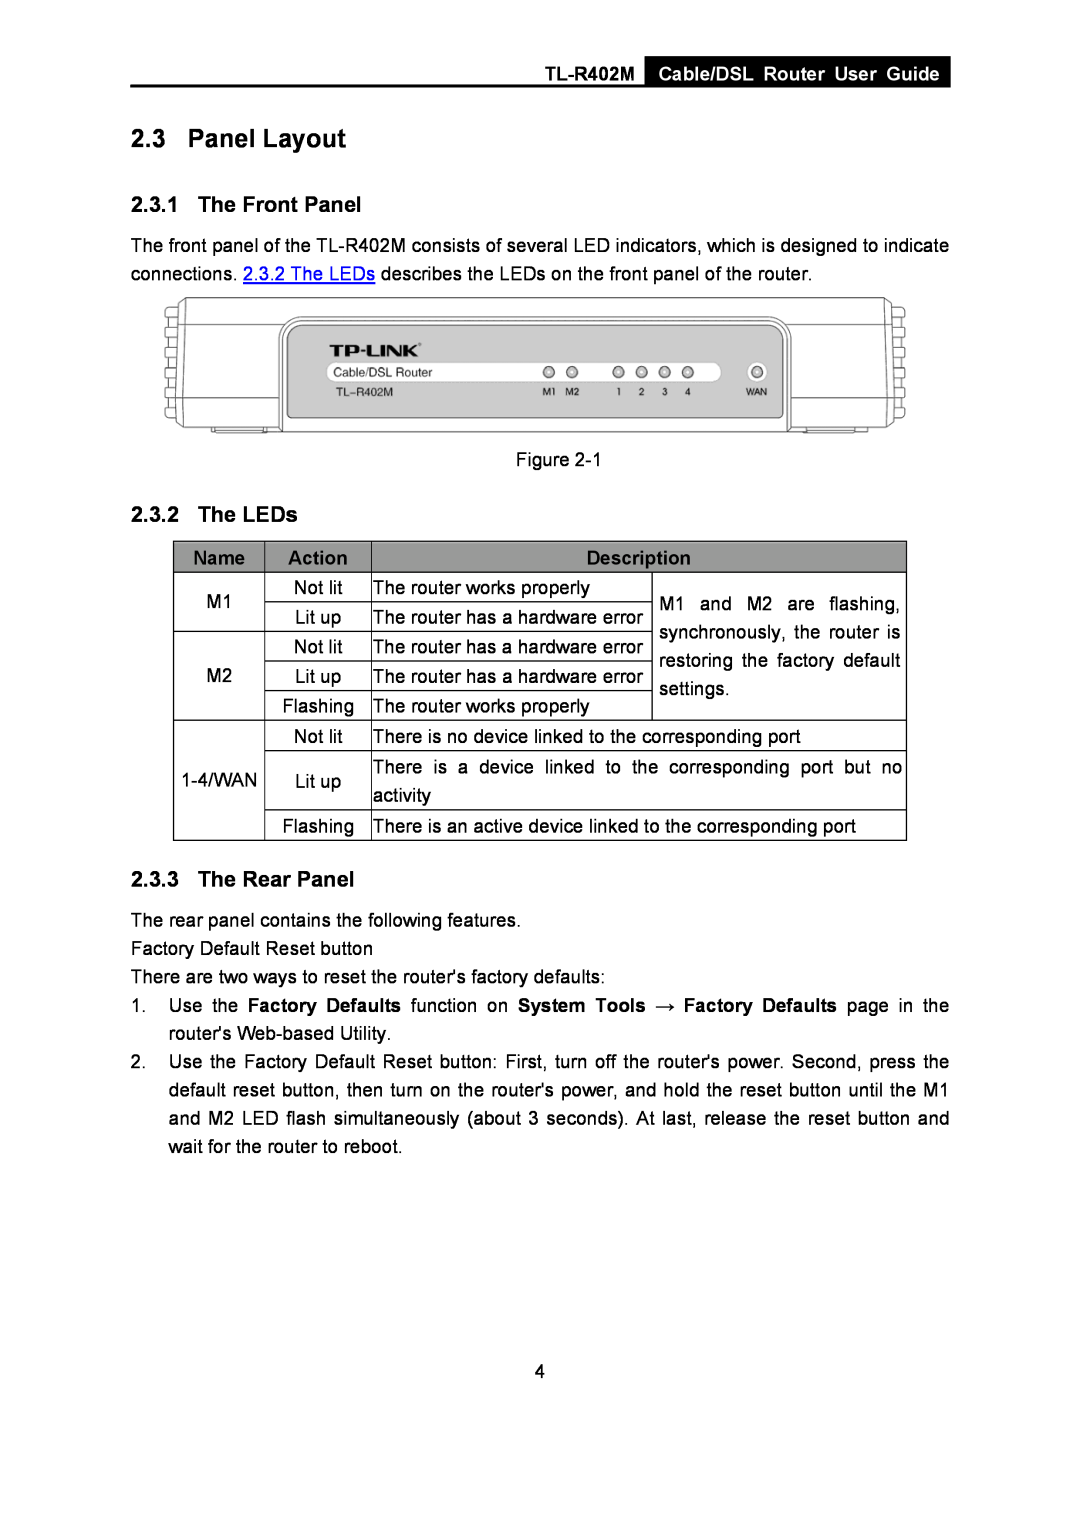 TP-Link manual Panel Layout, TL-R402M Cable/DSL Router User Guide, Name, Action, Description 